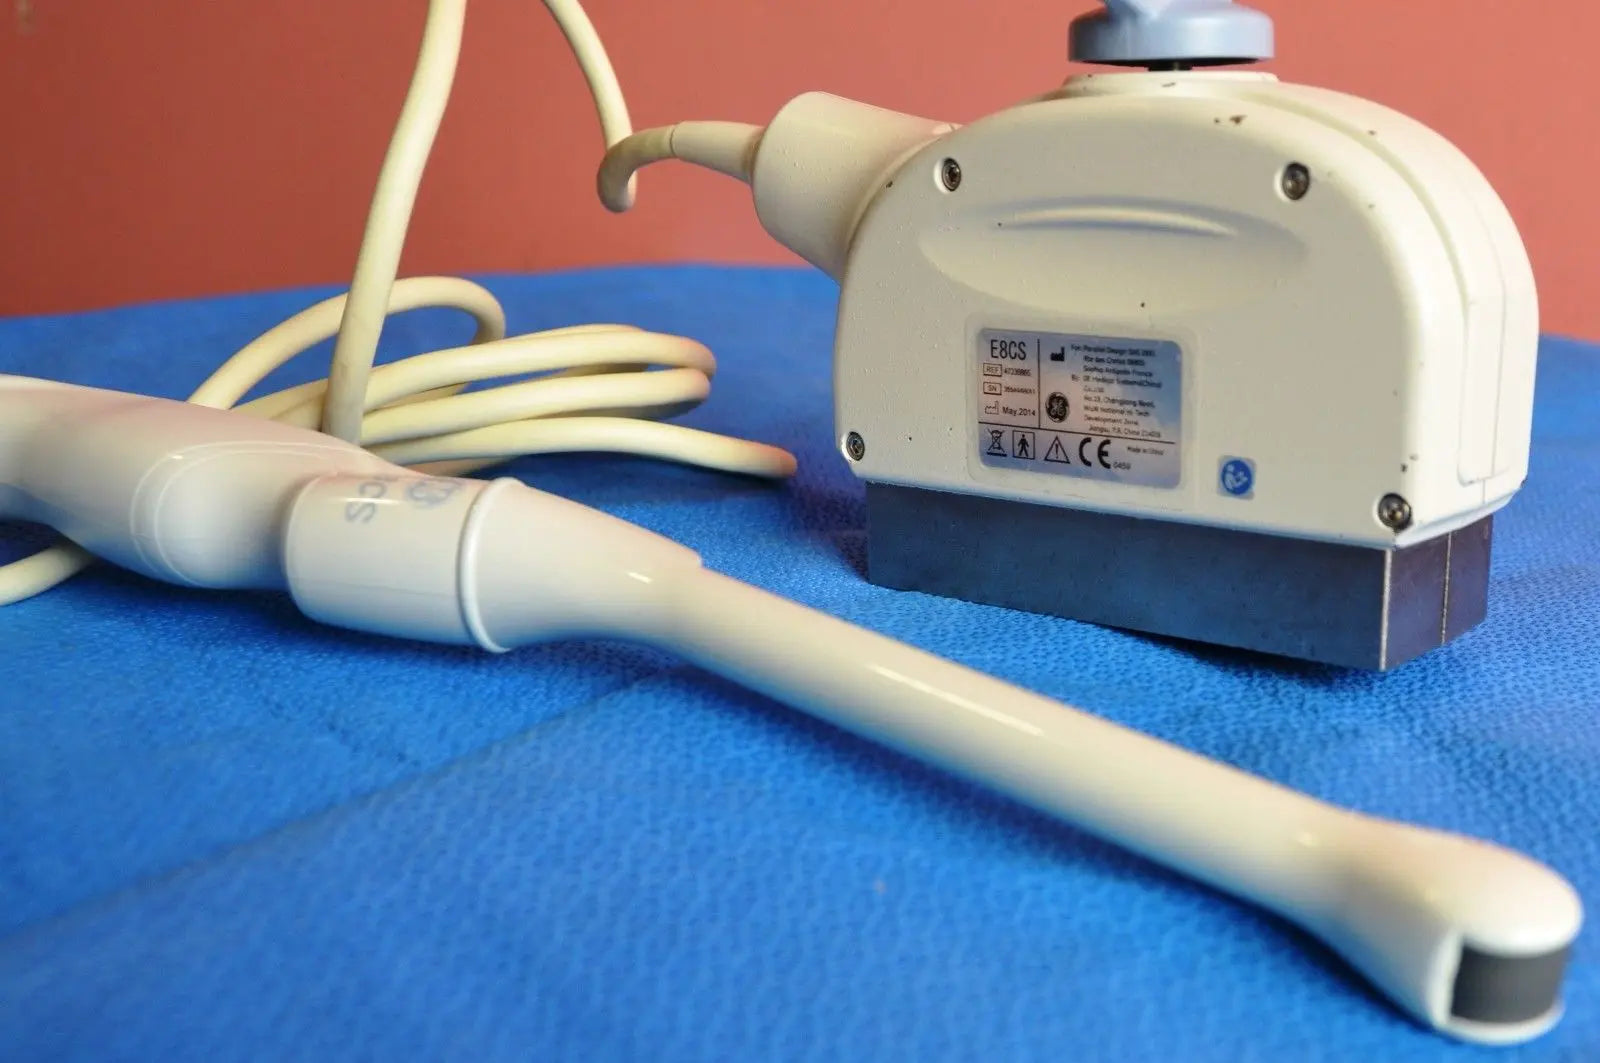 GE E8CS Endocavity Ultrasound Probe Gynecology Ultrasound Transducer 2014 DIAGNOSTIC ULTRASOUND MACHINES FOR SALE